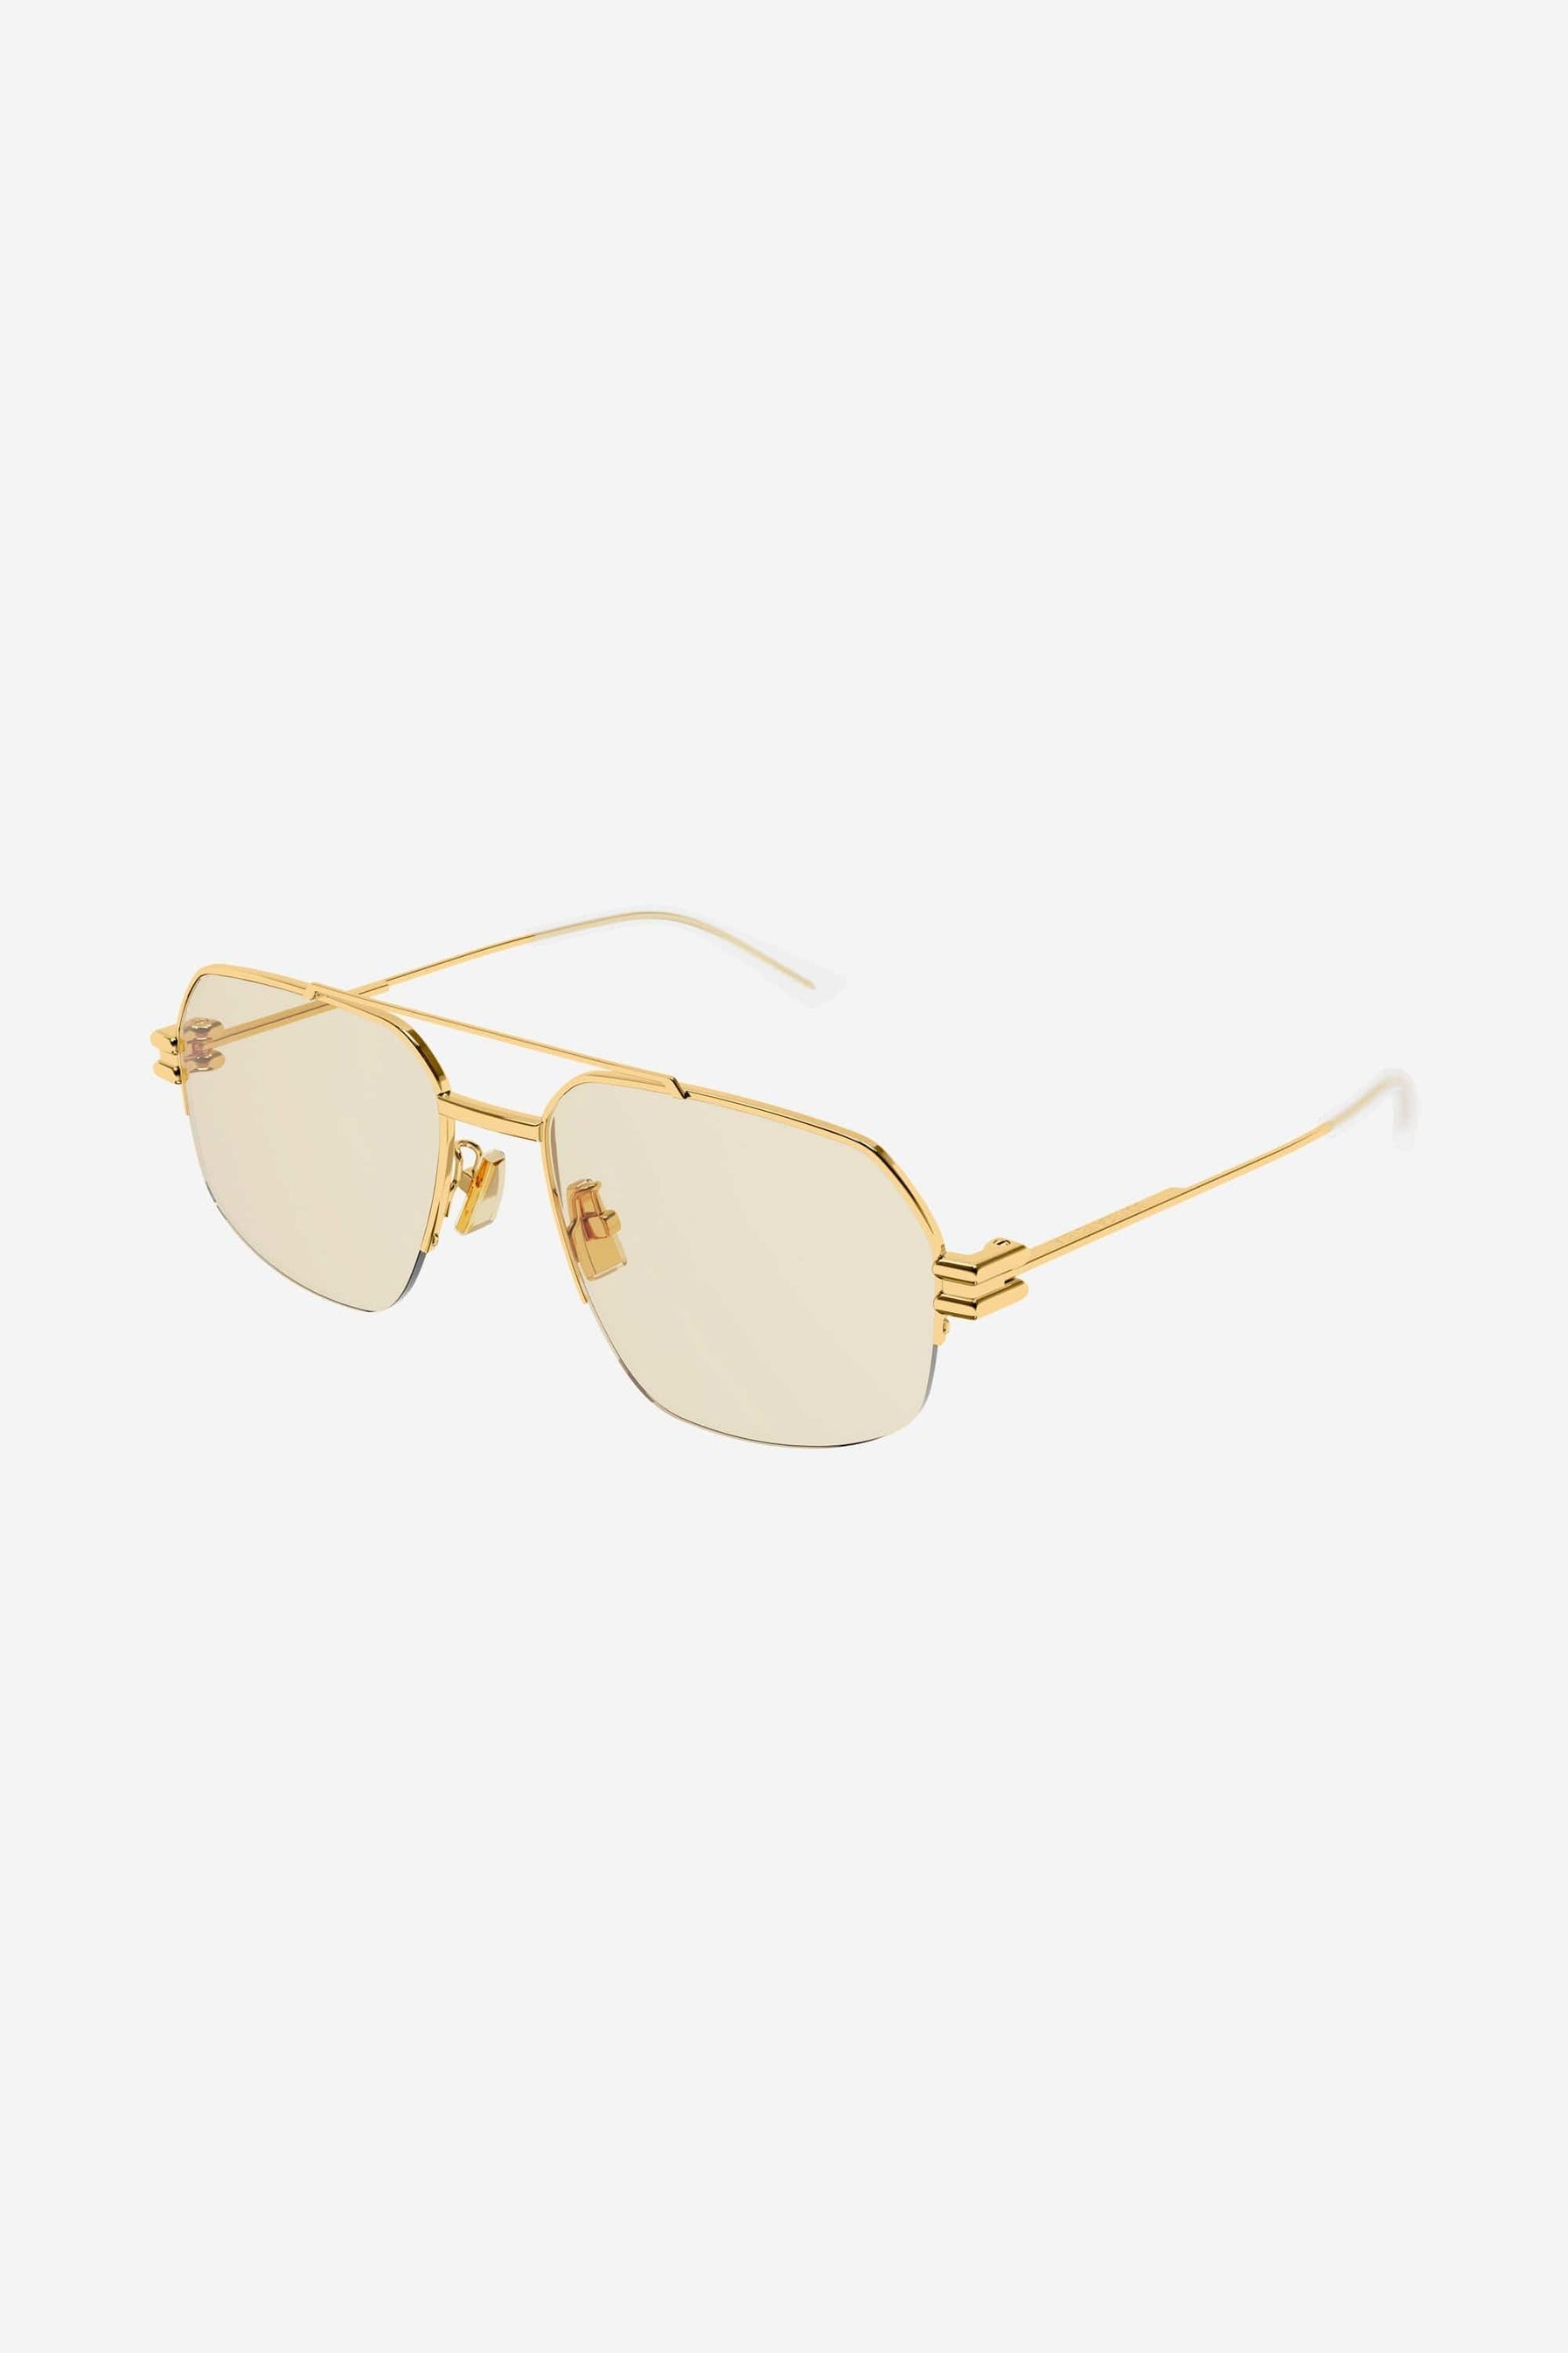 Bottega Veneta gold light sunglasses - Eyewear Club